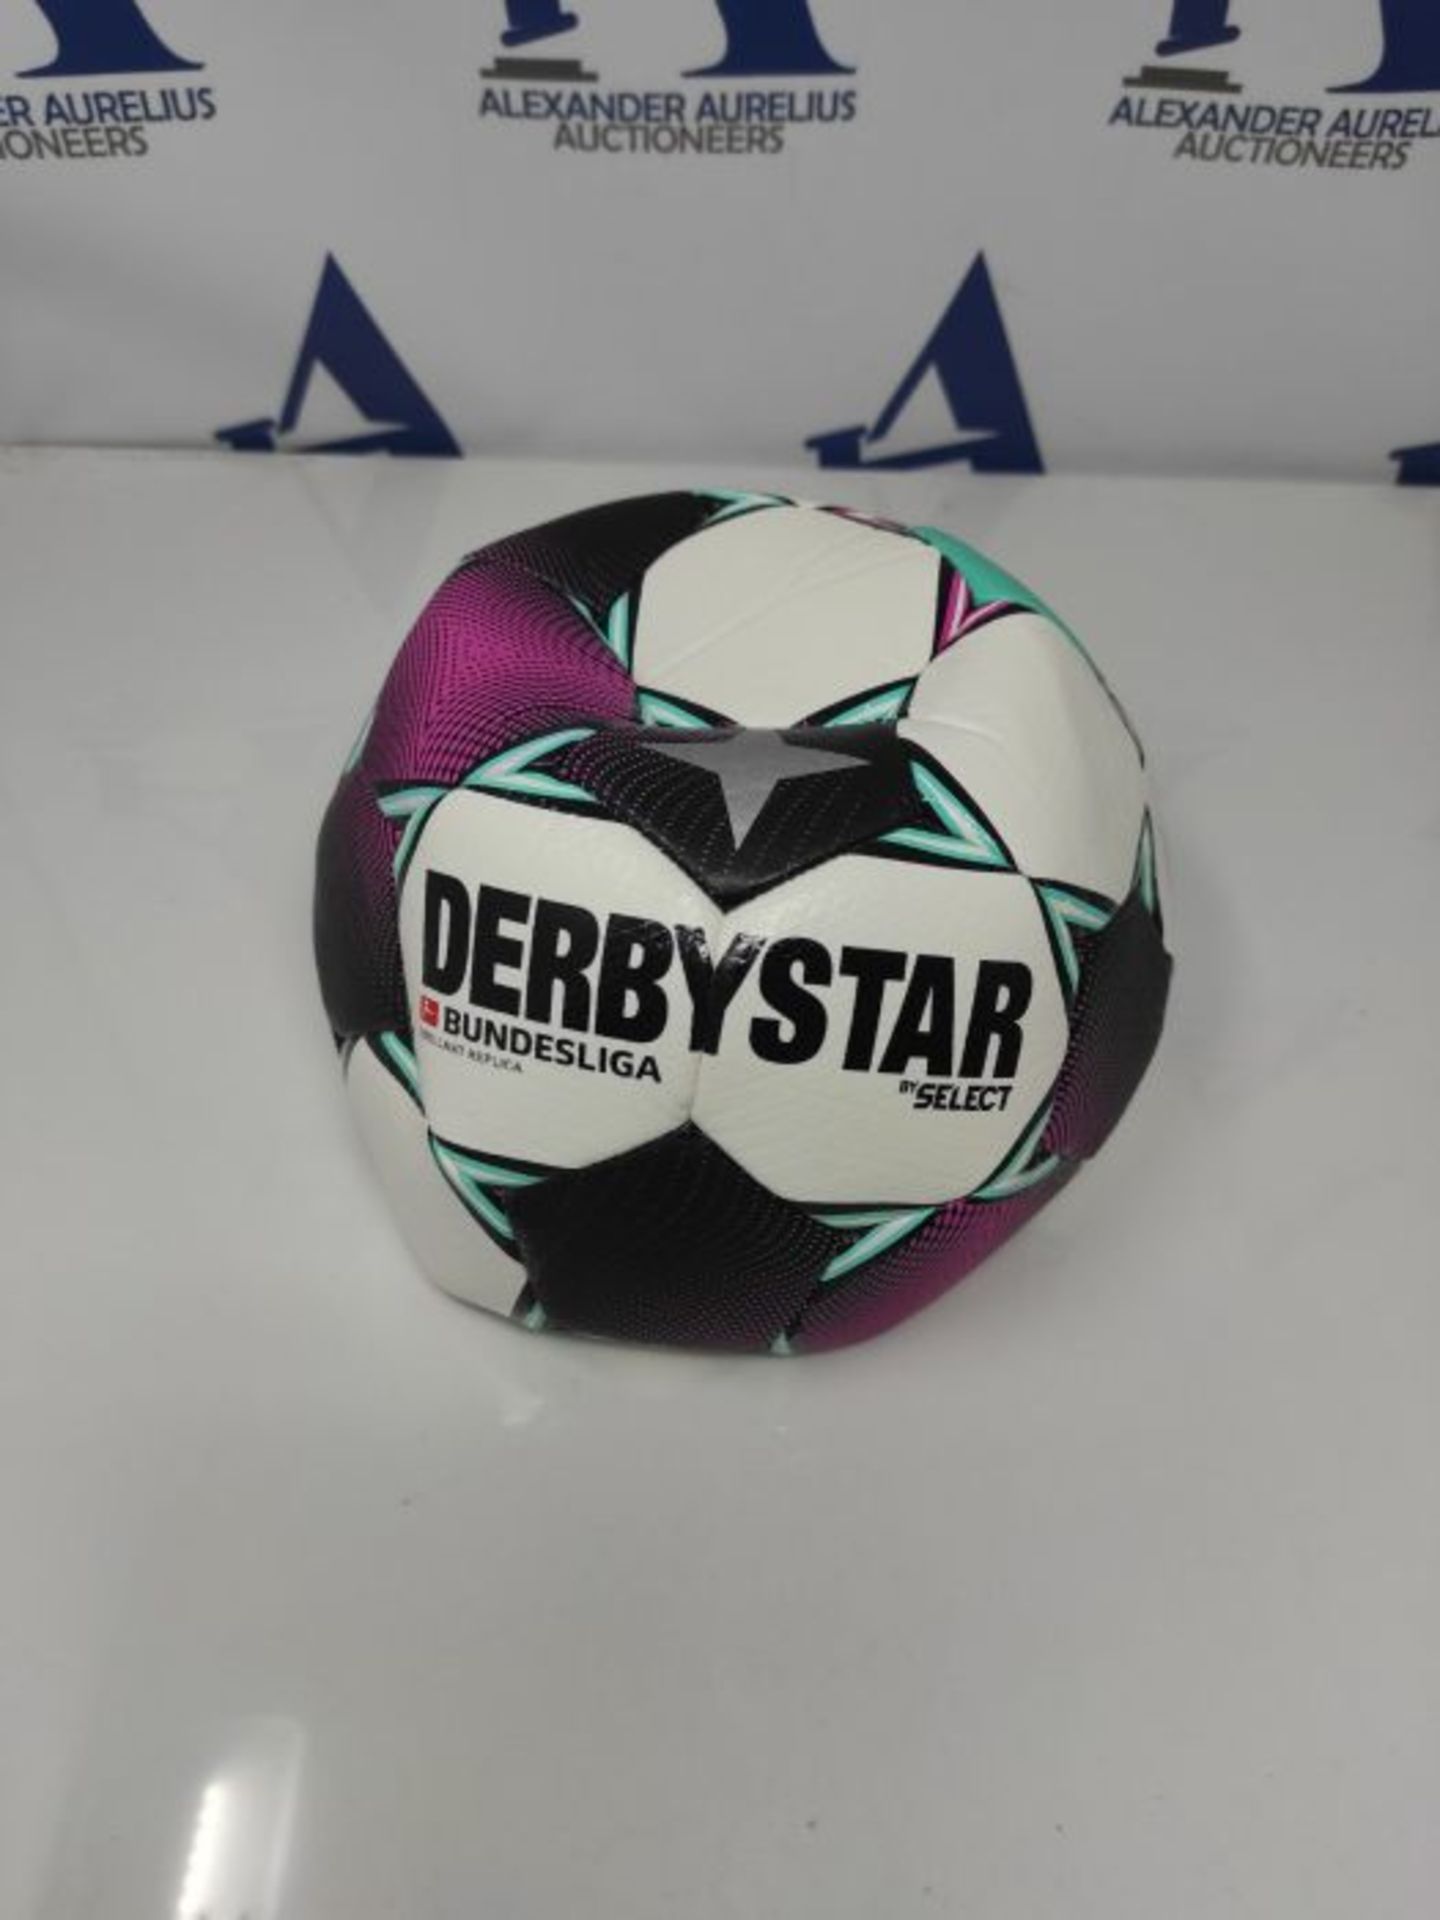 Derbystar Unisex - Adult Bundesliga Brillant Replica Football, Multicoloured, 4 - Image 2 of 2